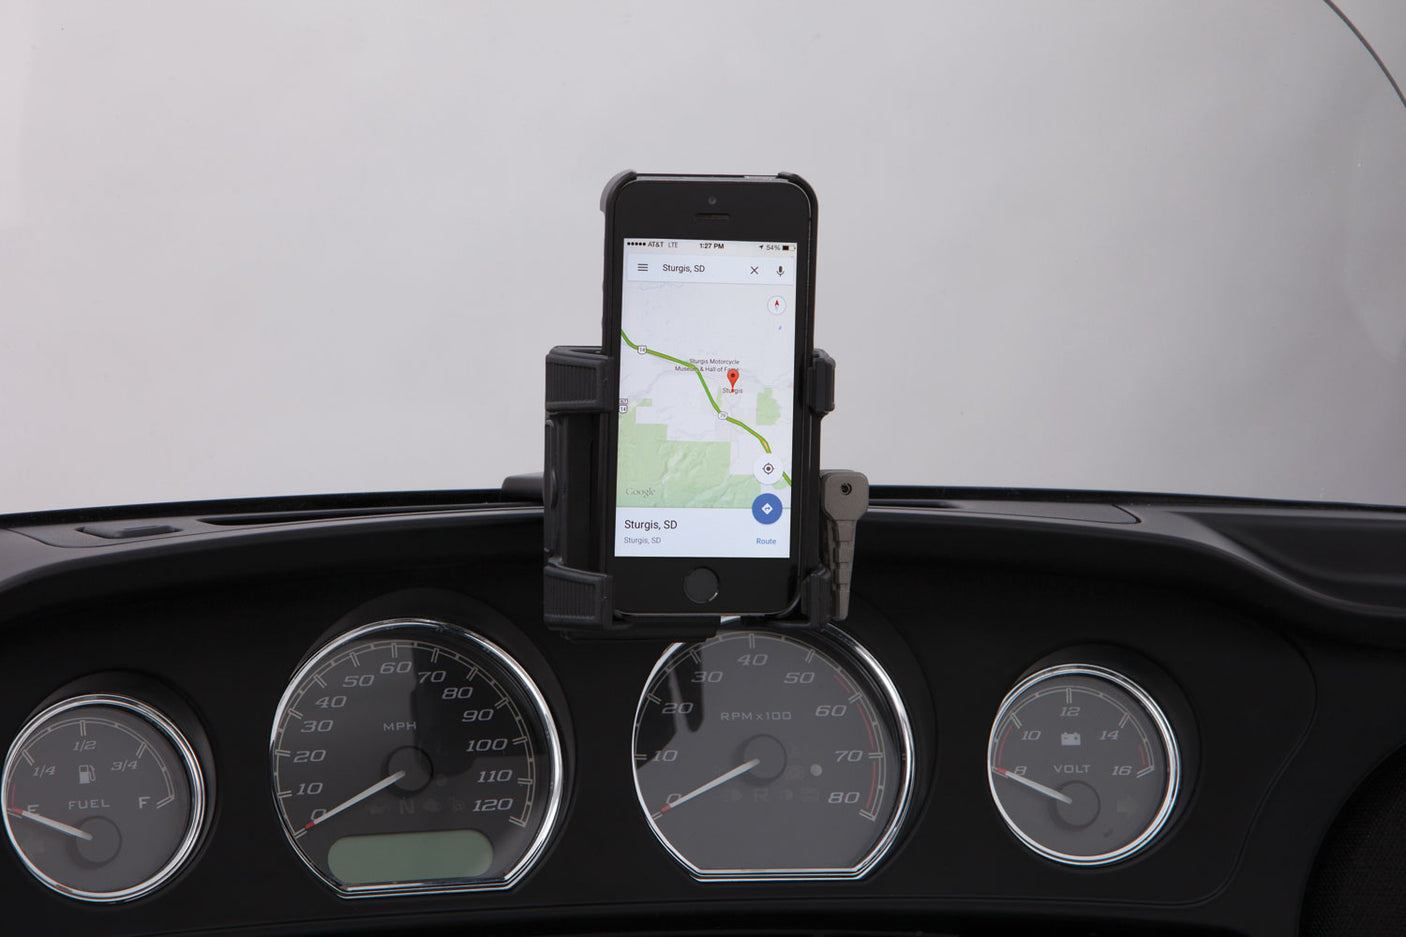 Smartphone / GPS Holder Standard or Premium With Fairing Mount